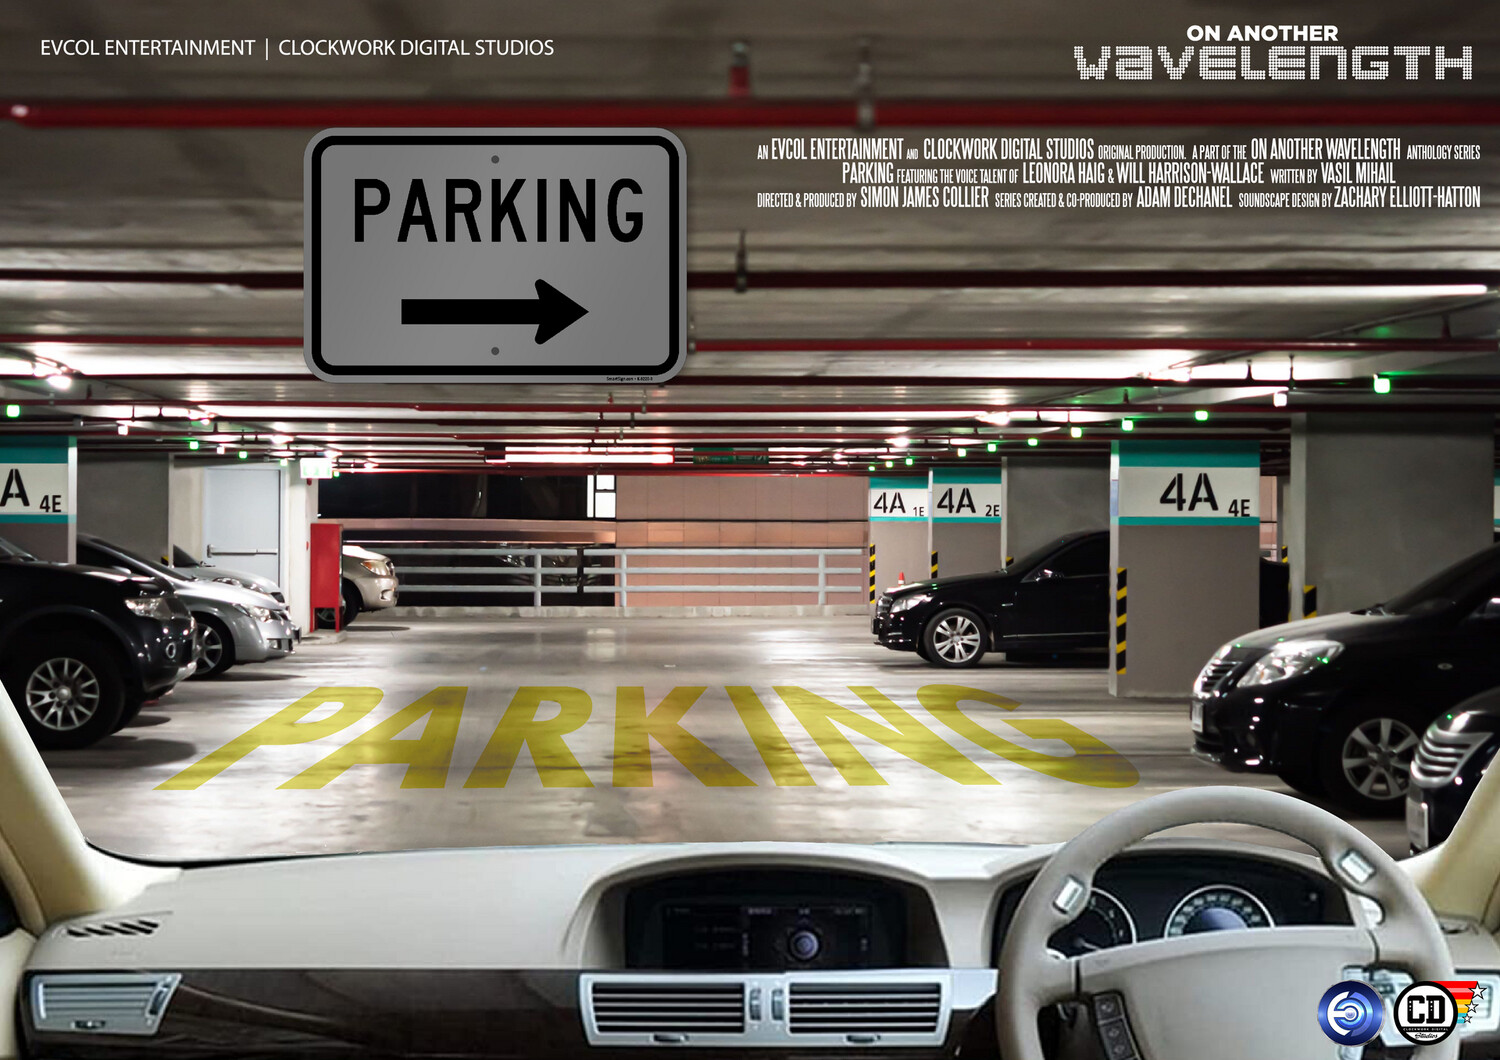 Parking by Vasil Mihail